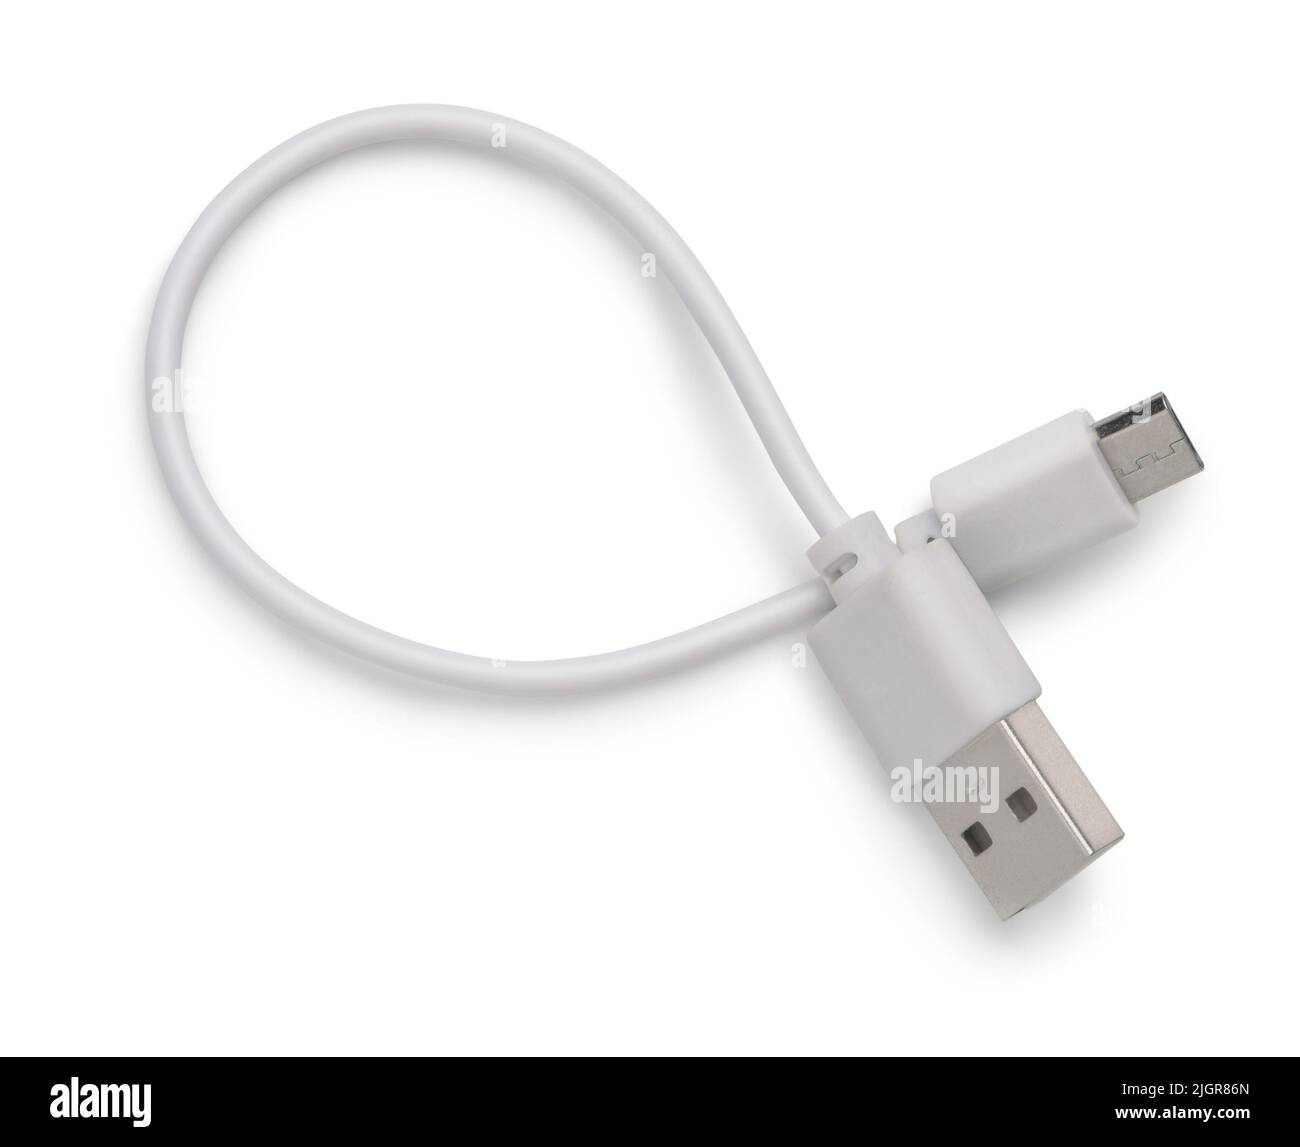 Vista superior del cable USB OTG gris corto aislado sobre blanco Foto de stock